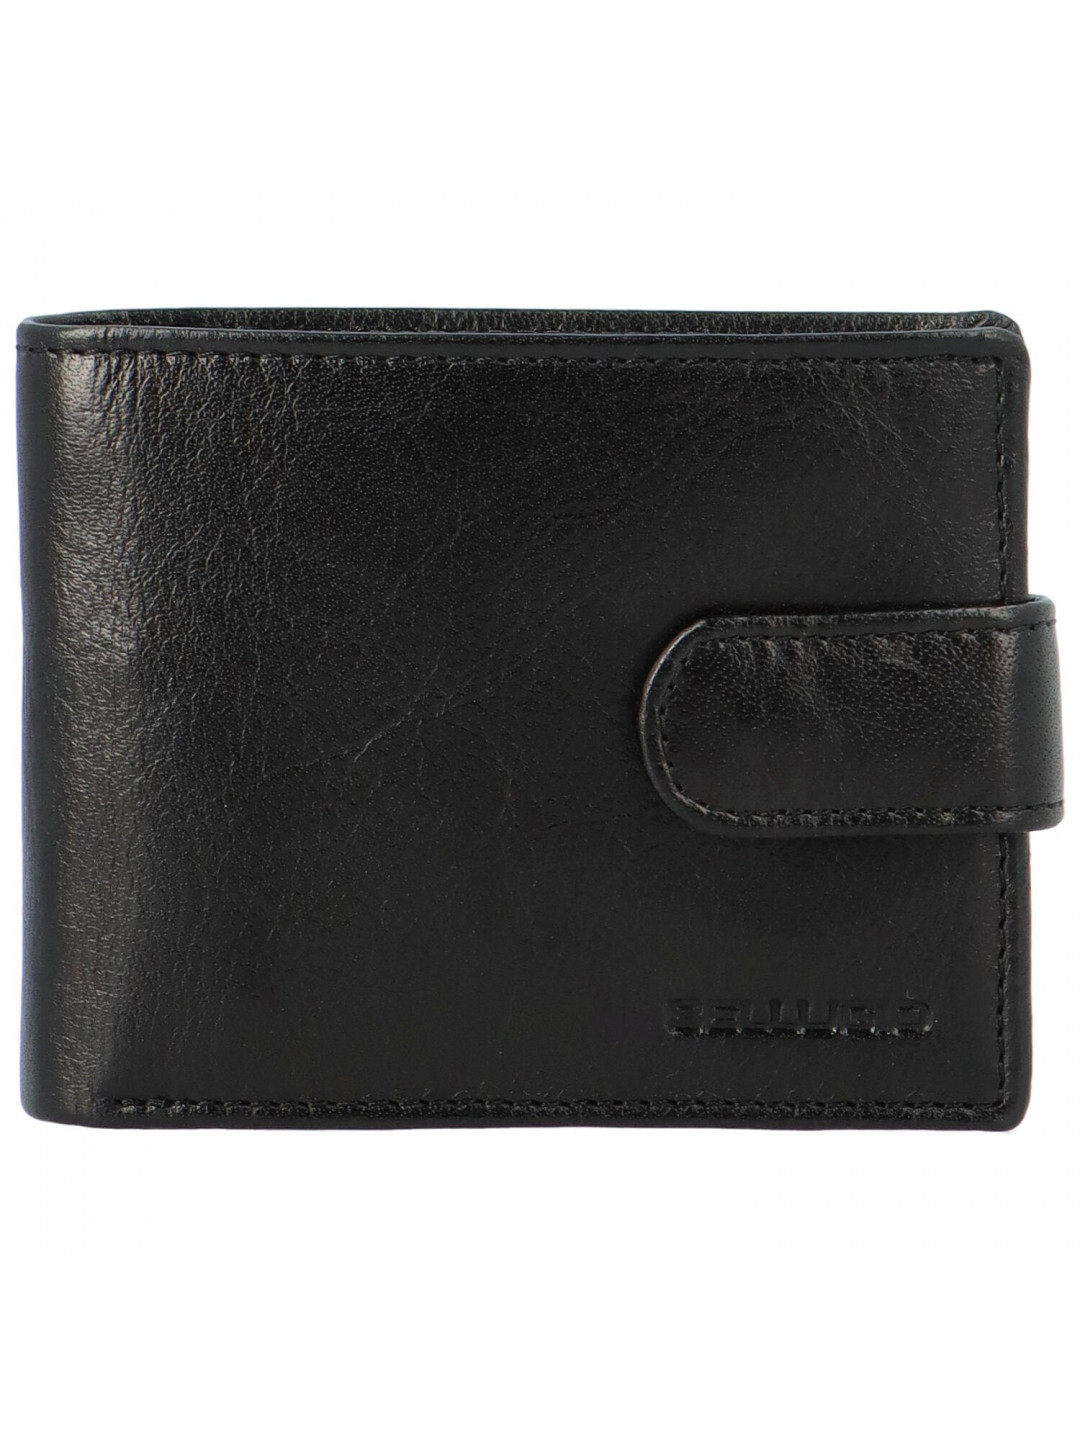 Pánská kožená peněženka na šířku Bellugio Milo černá